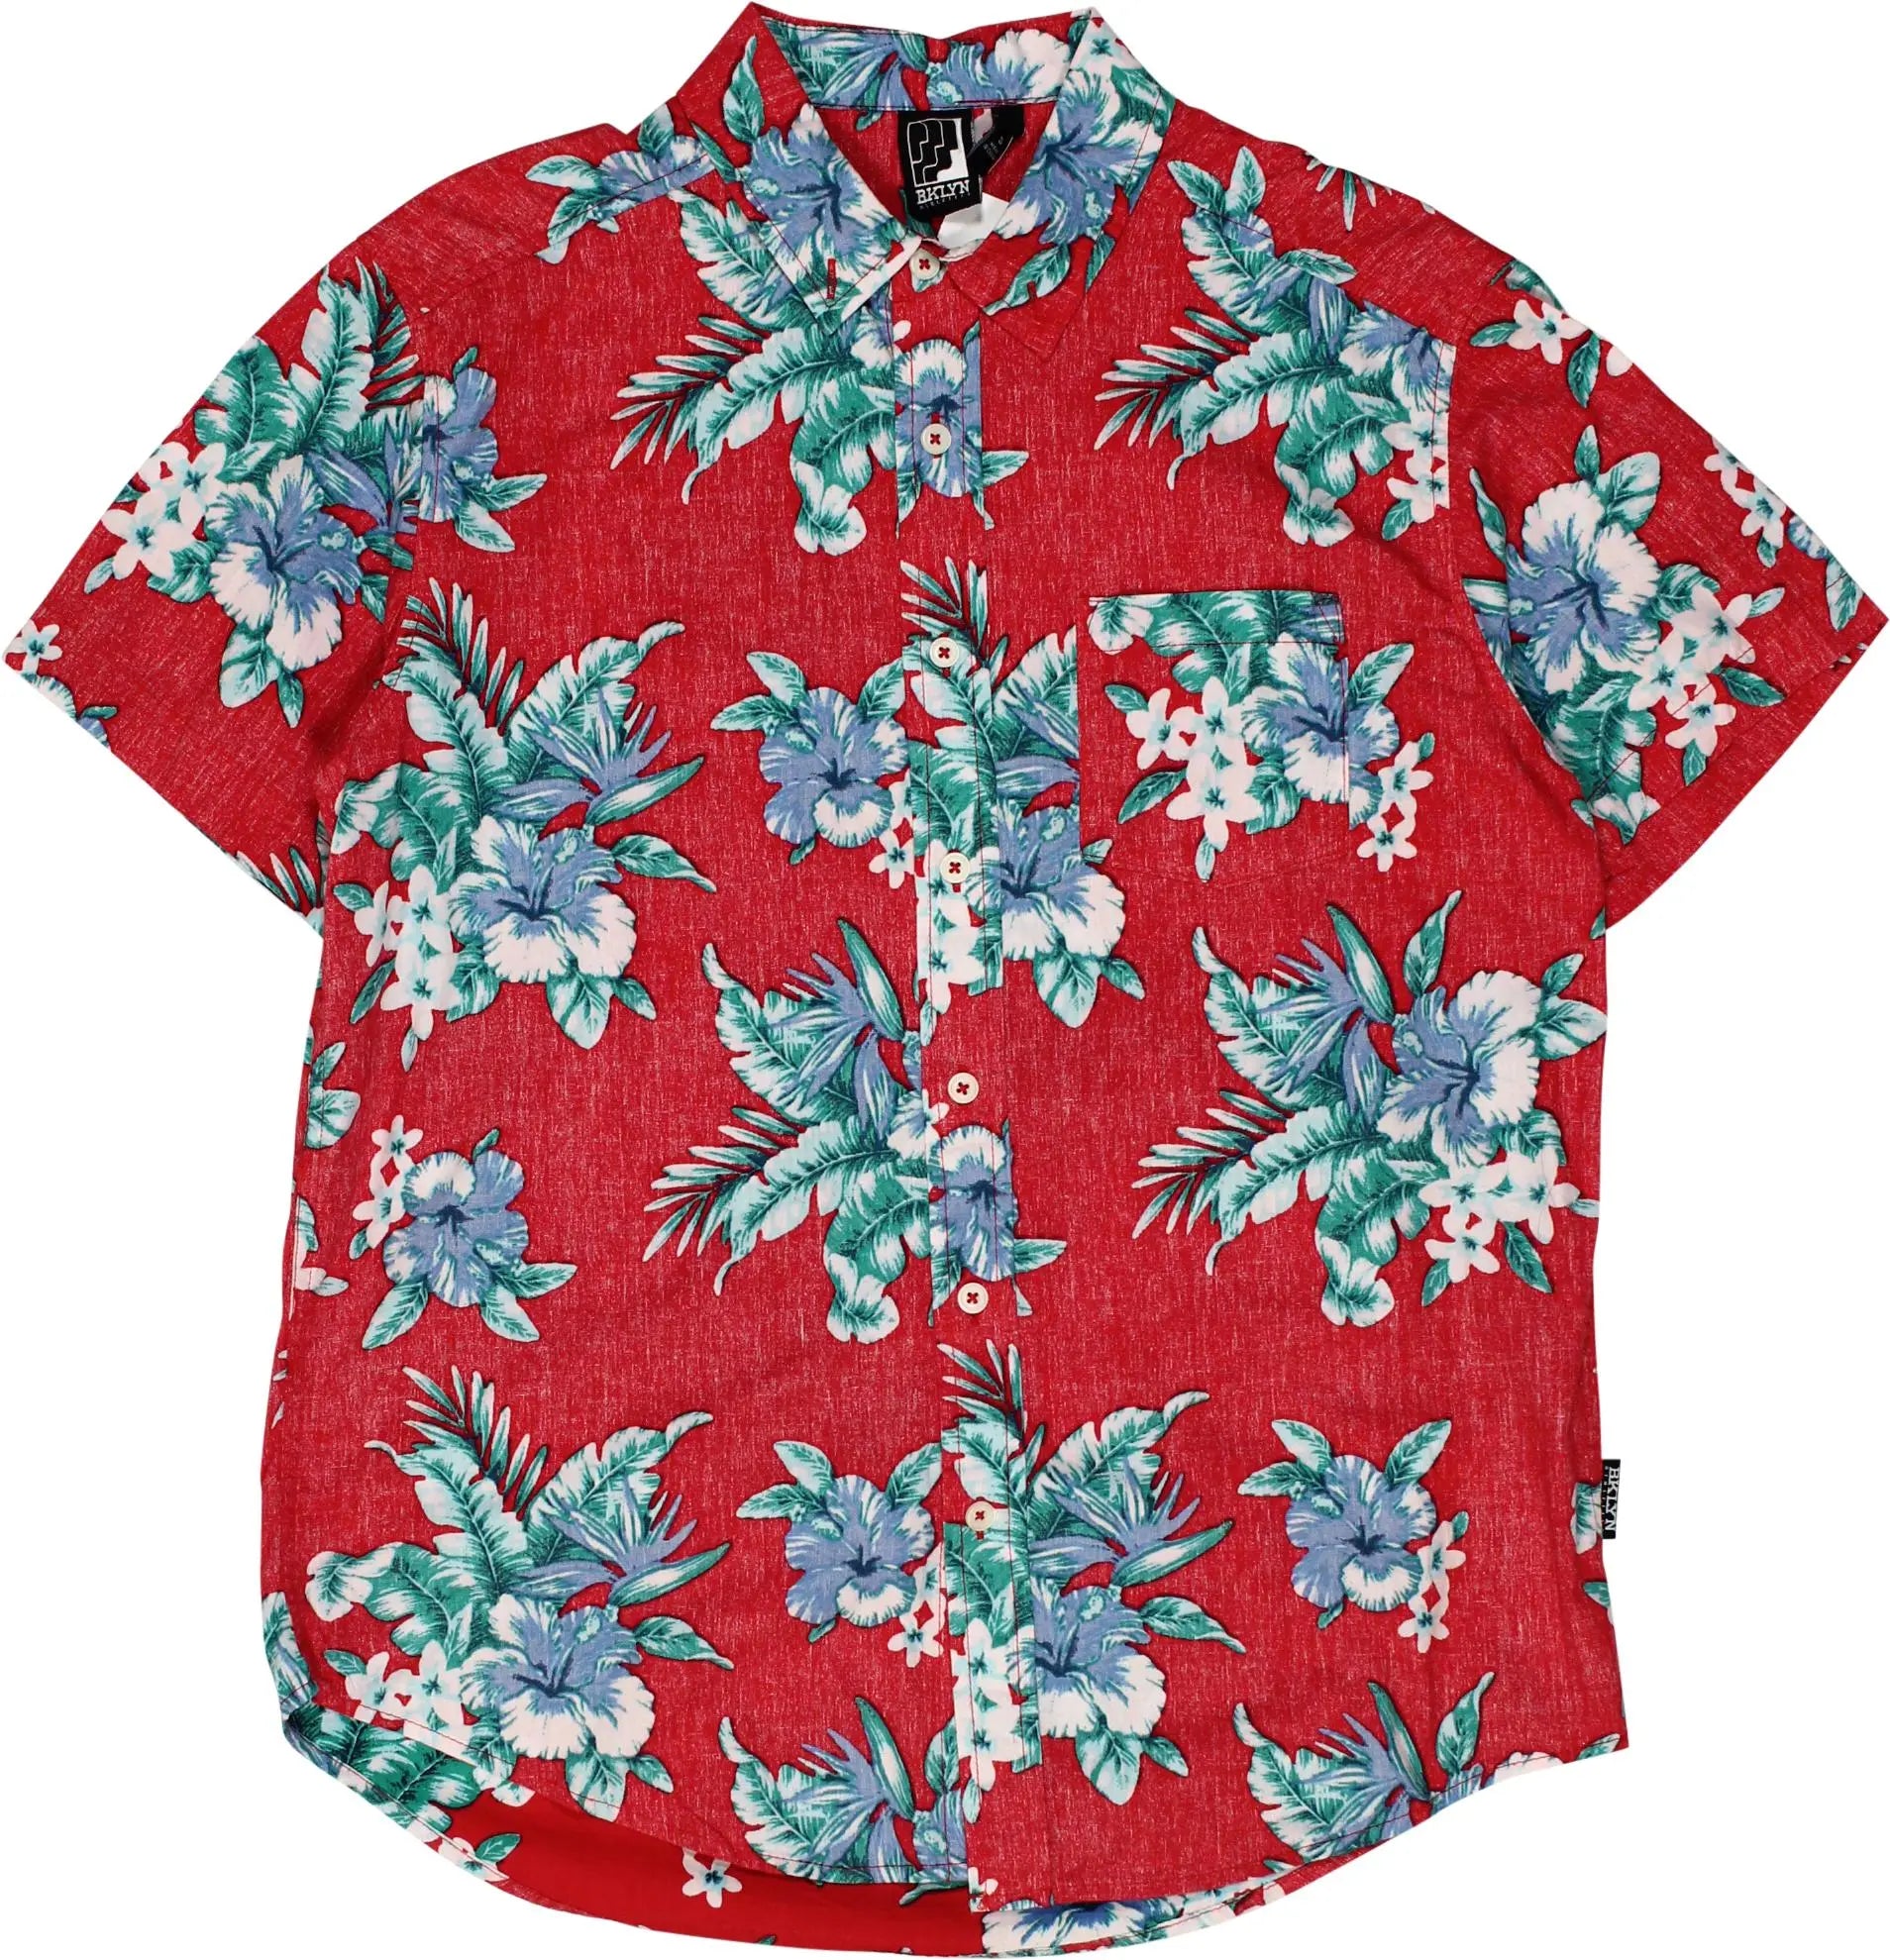 BKLYN Athletics - Hawaiian Shirt- ThriftTale.com - Vintage and second handclothing